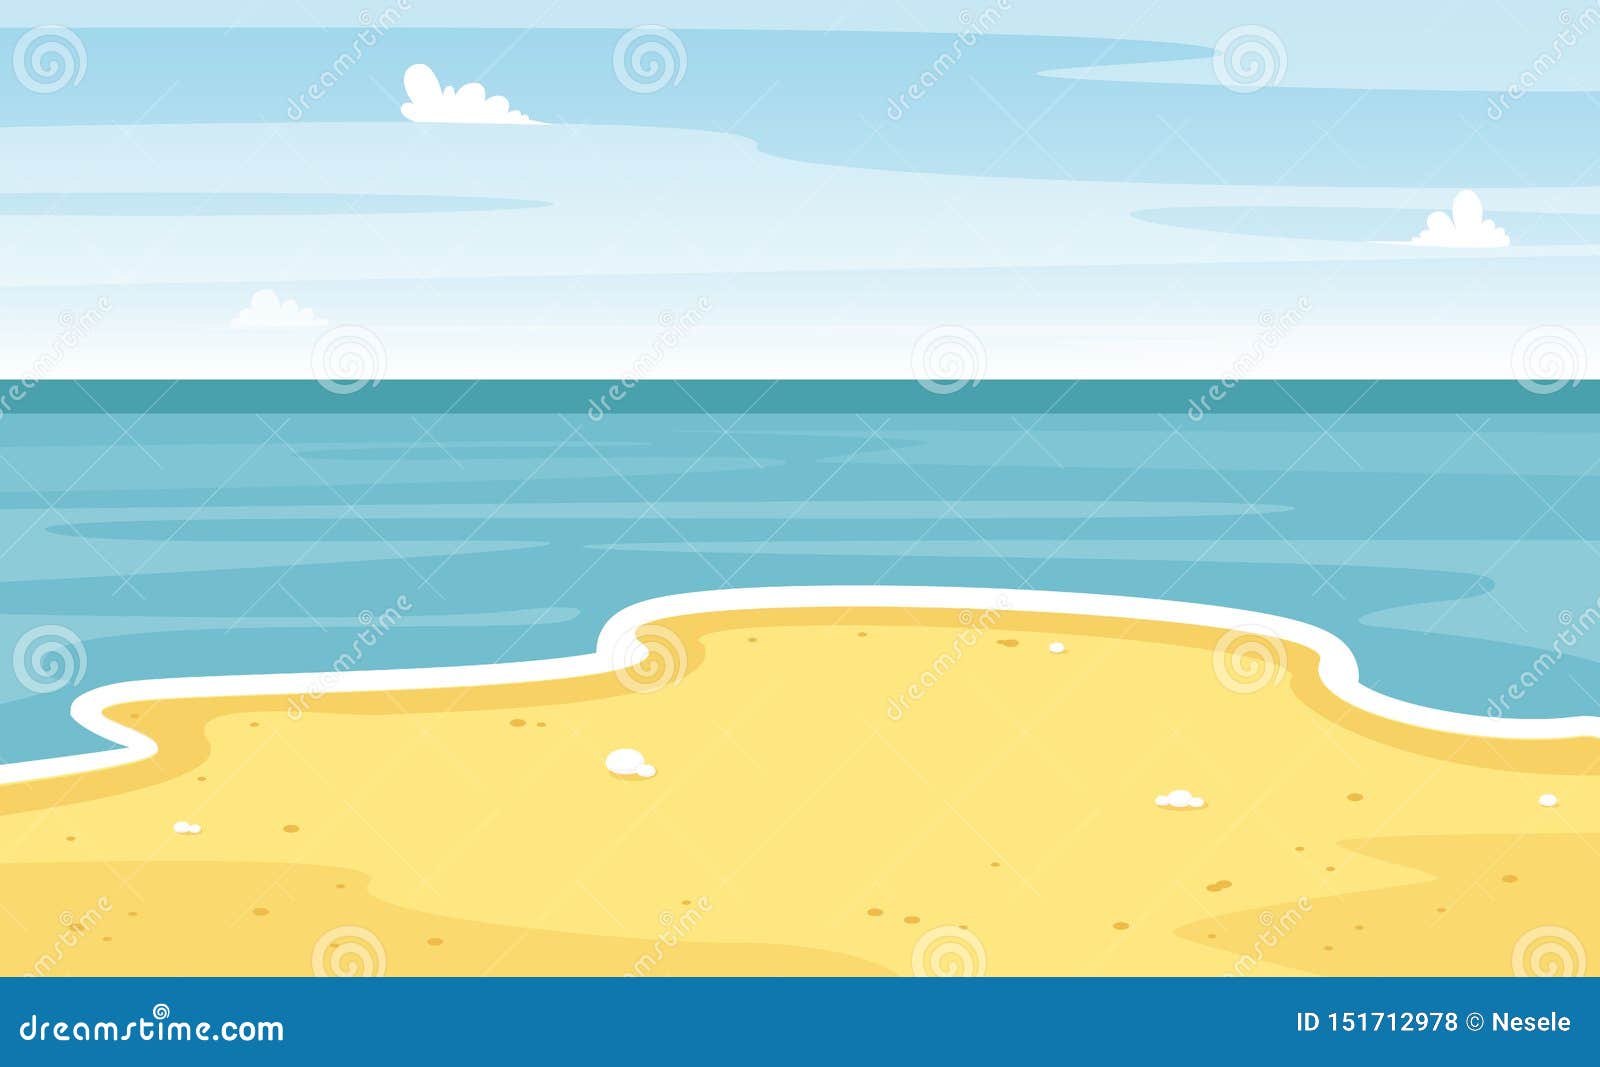 Beach and Sand. Sea or Ocean Scene. Summer Landscape. Cartoon Vacation  Travel Banner Stock Vector - Illustration of natural, resort: 151712978